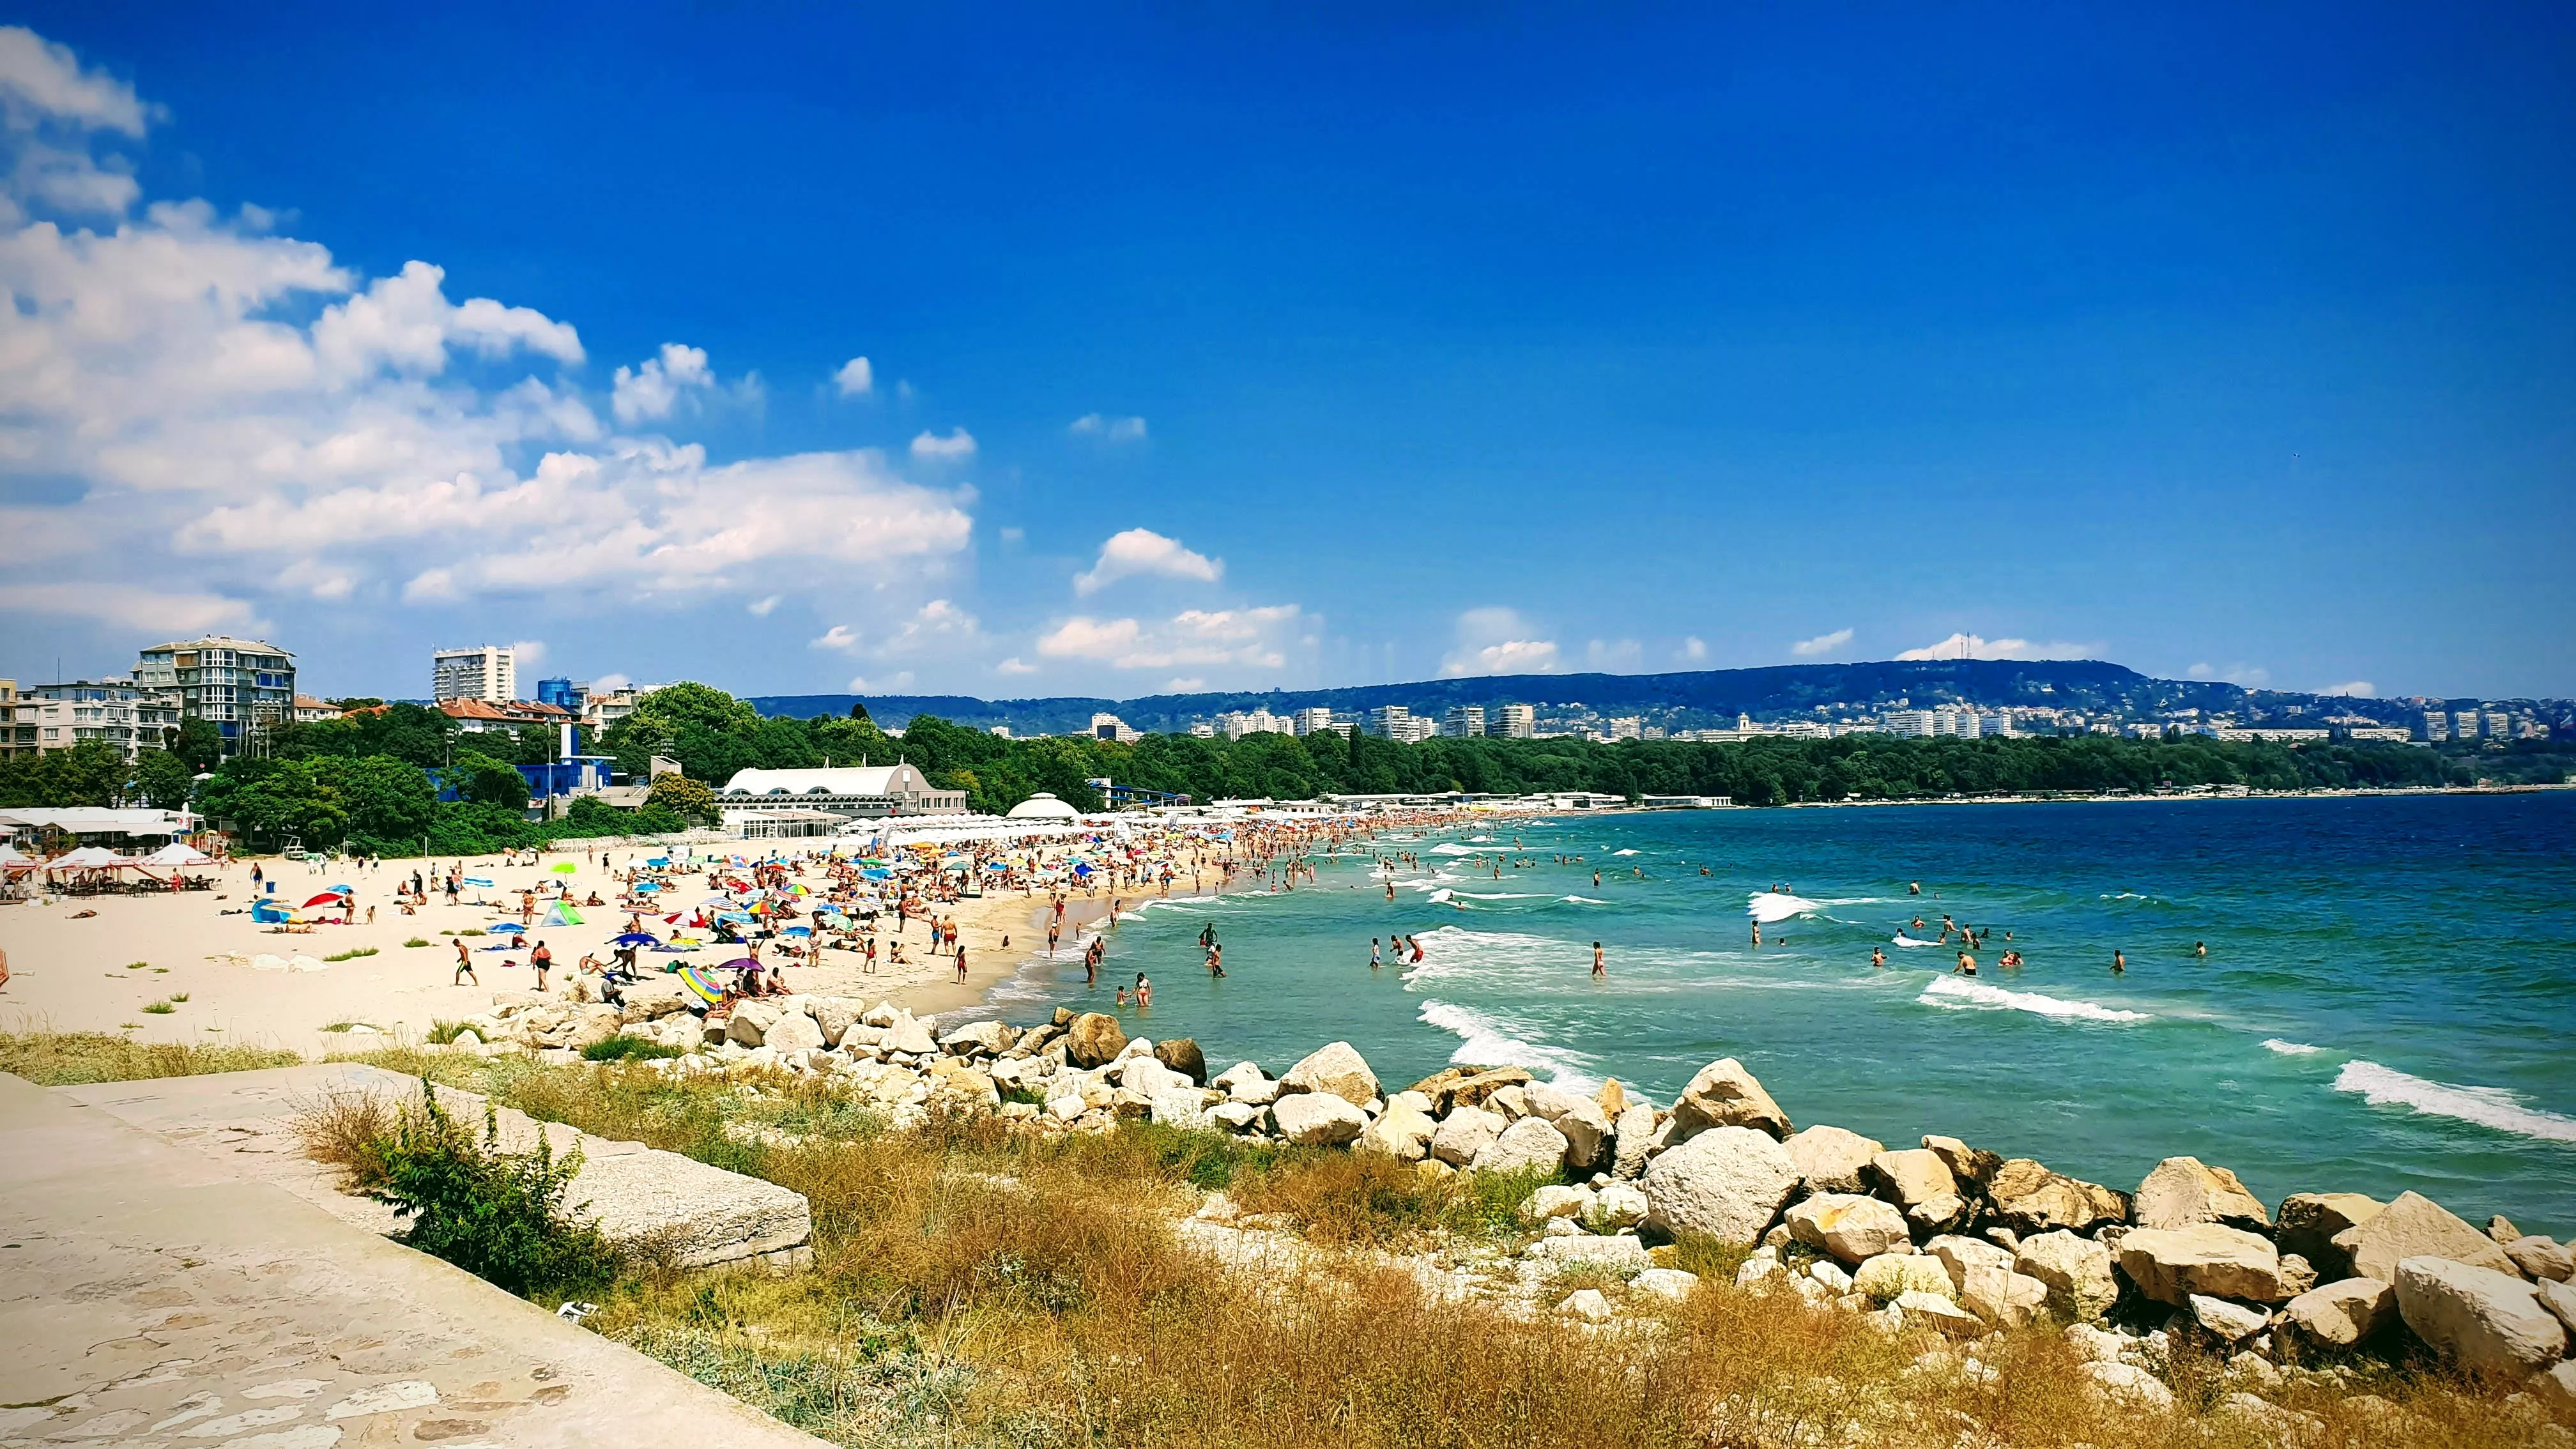 Rappongi Beach in Bulgaria, Europe | Beaches - Rated 0.7